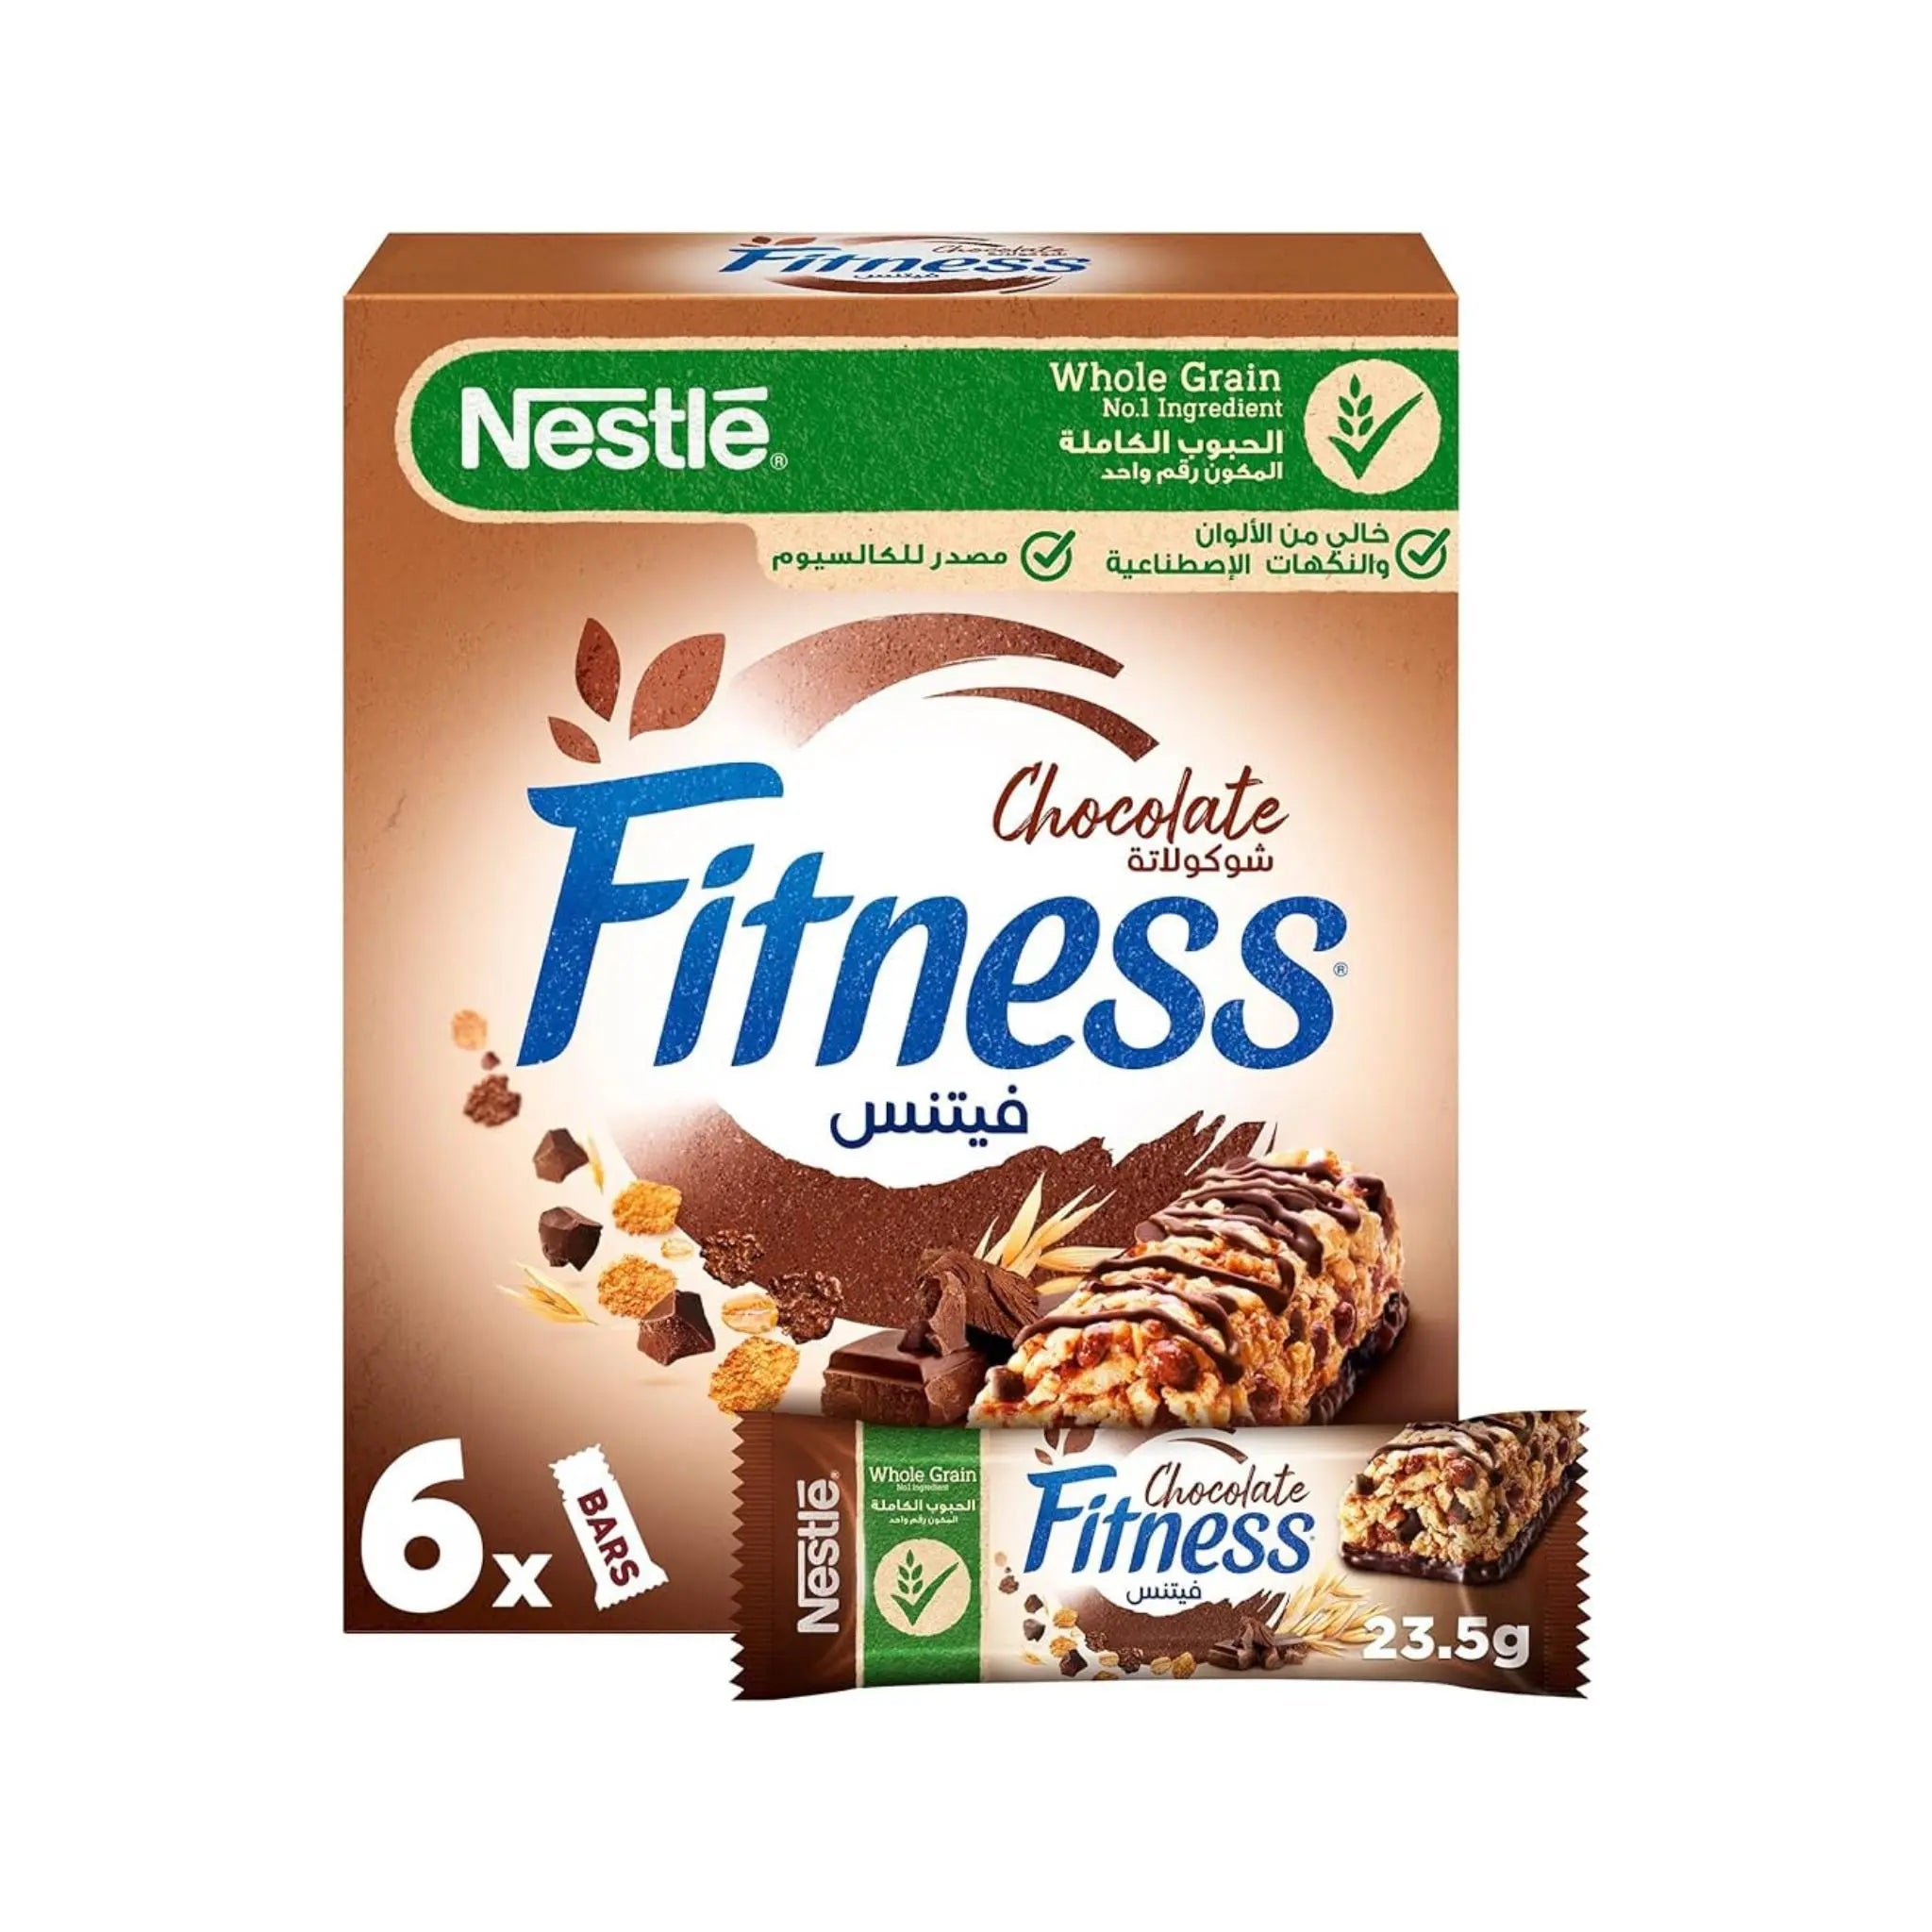 Nestle Fitness Chocolate Cereal Bars - 16x6x23.5g (1 carton) - Marino.AE